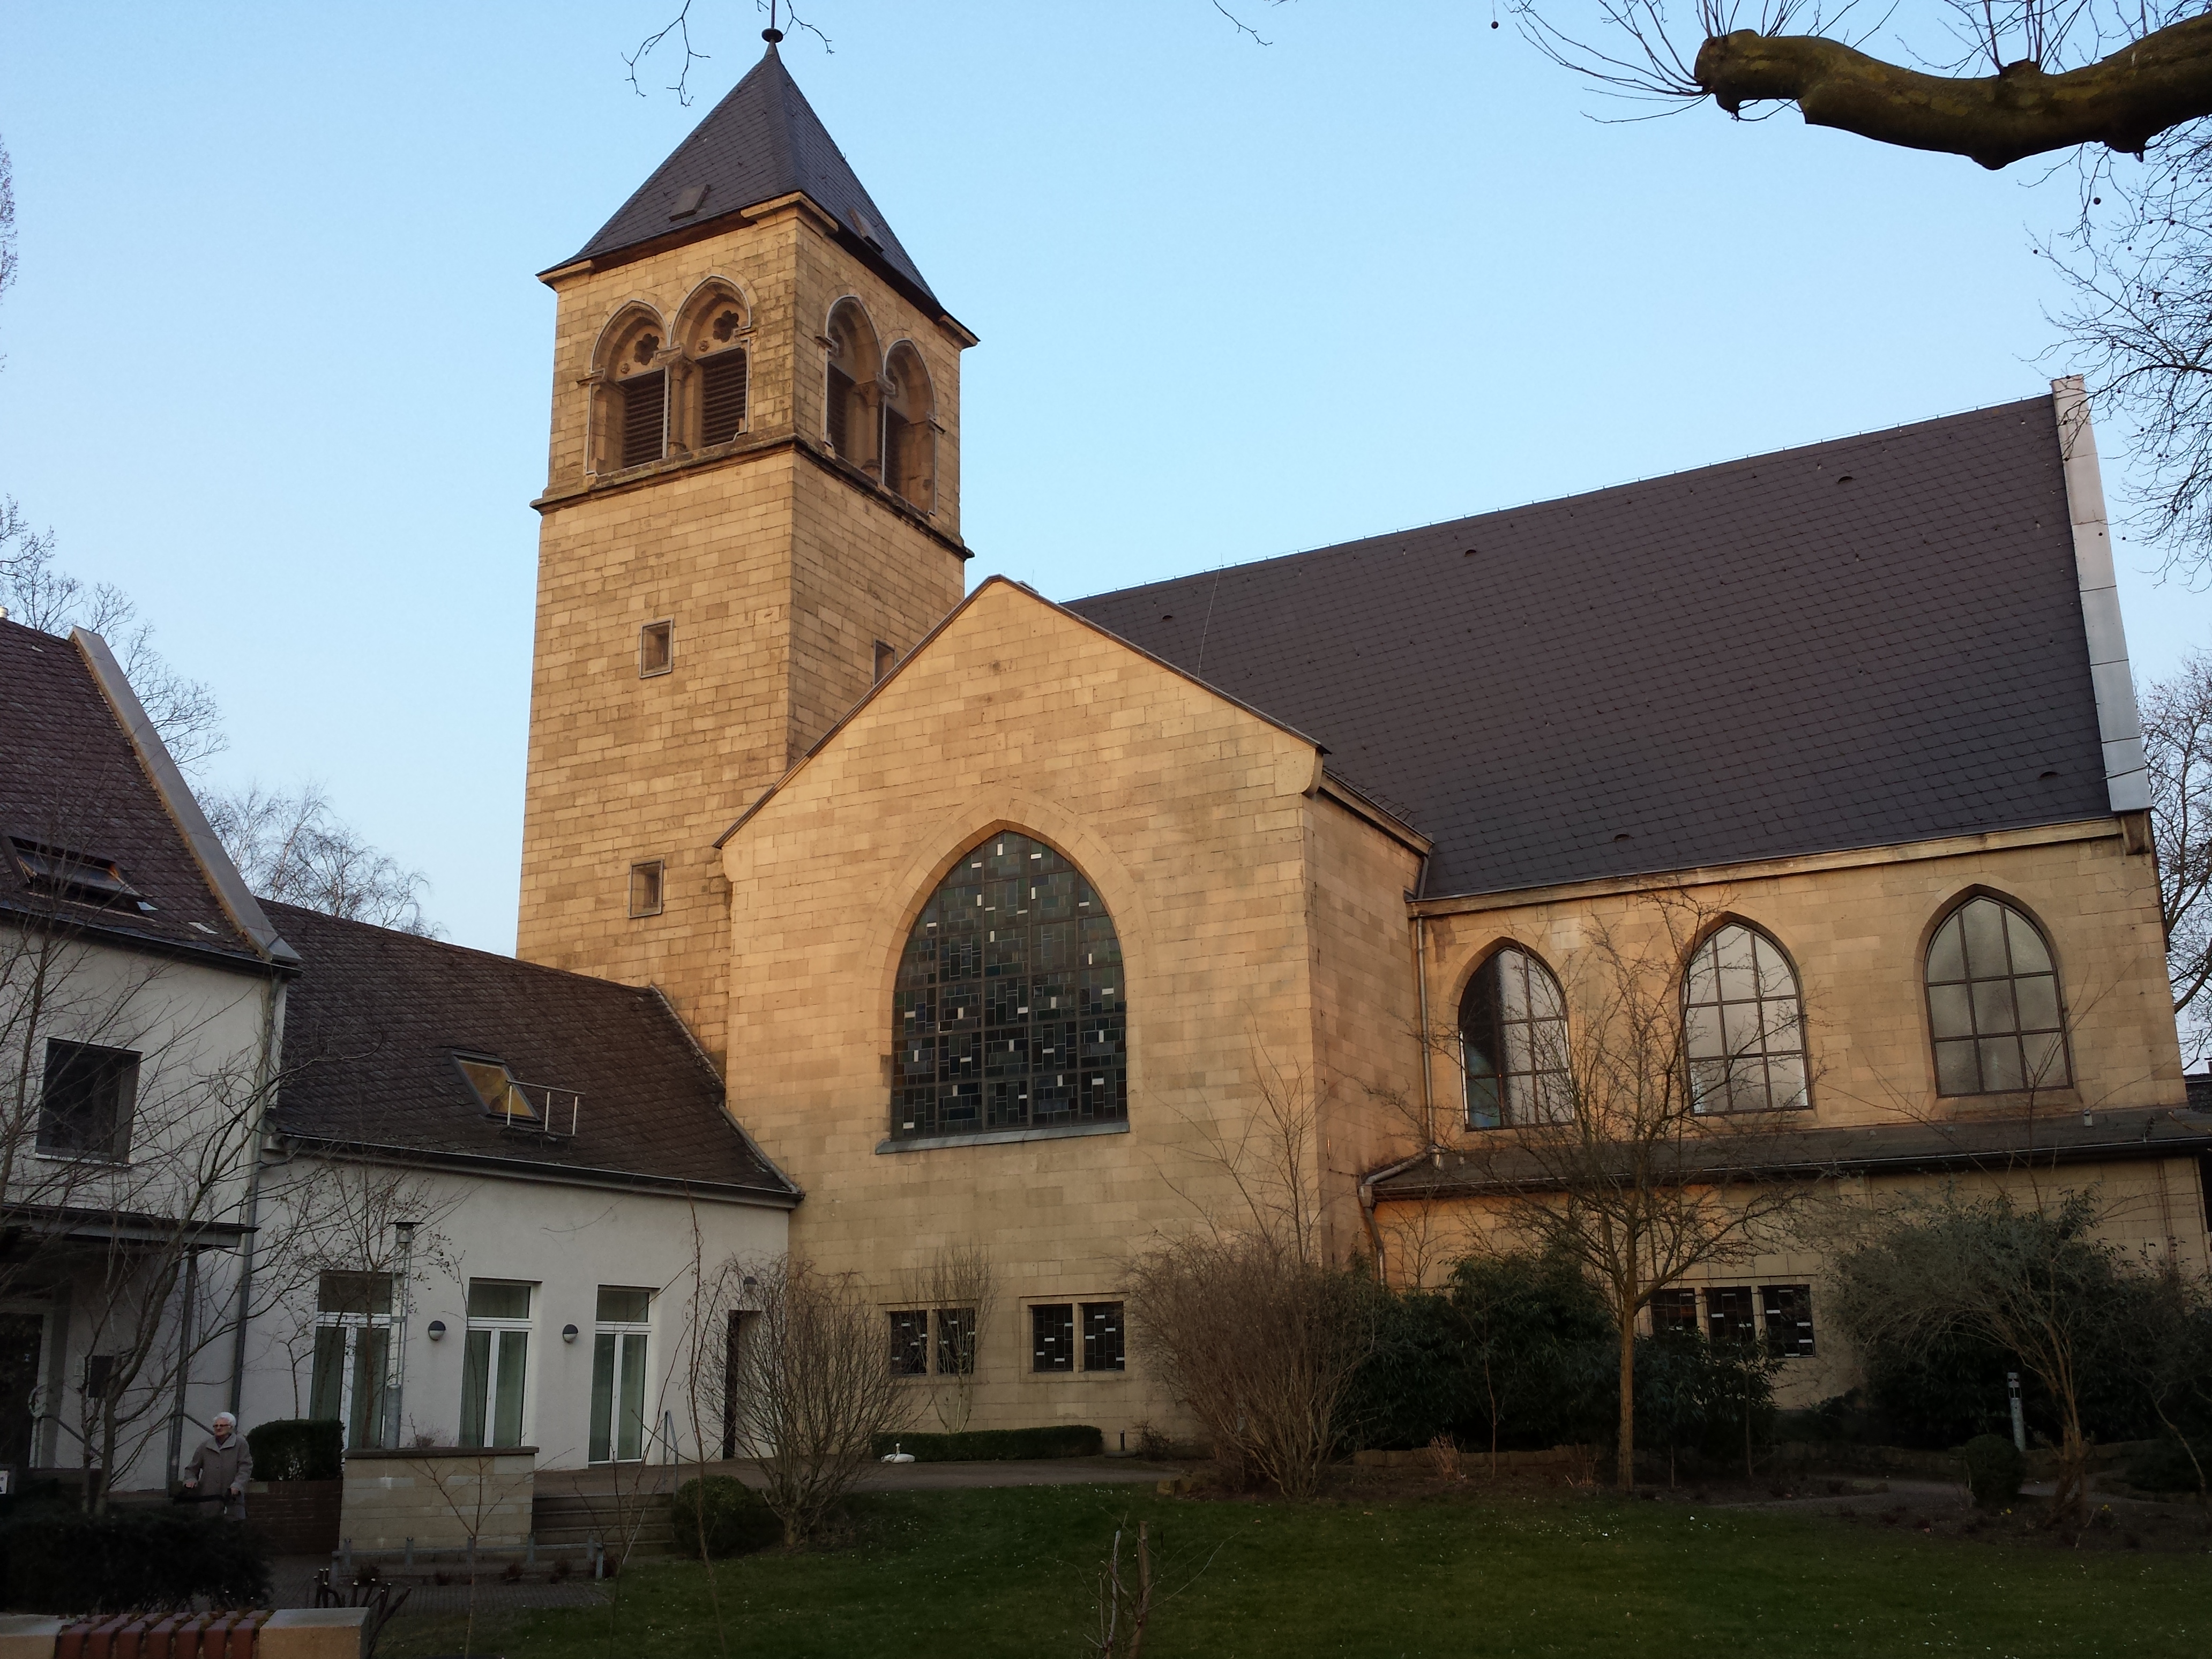 Bild 1 Gnadenkirche Wanheimerort - Evangelische Gemeinde Duisburg-Wanheimerort in Duisburg